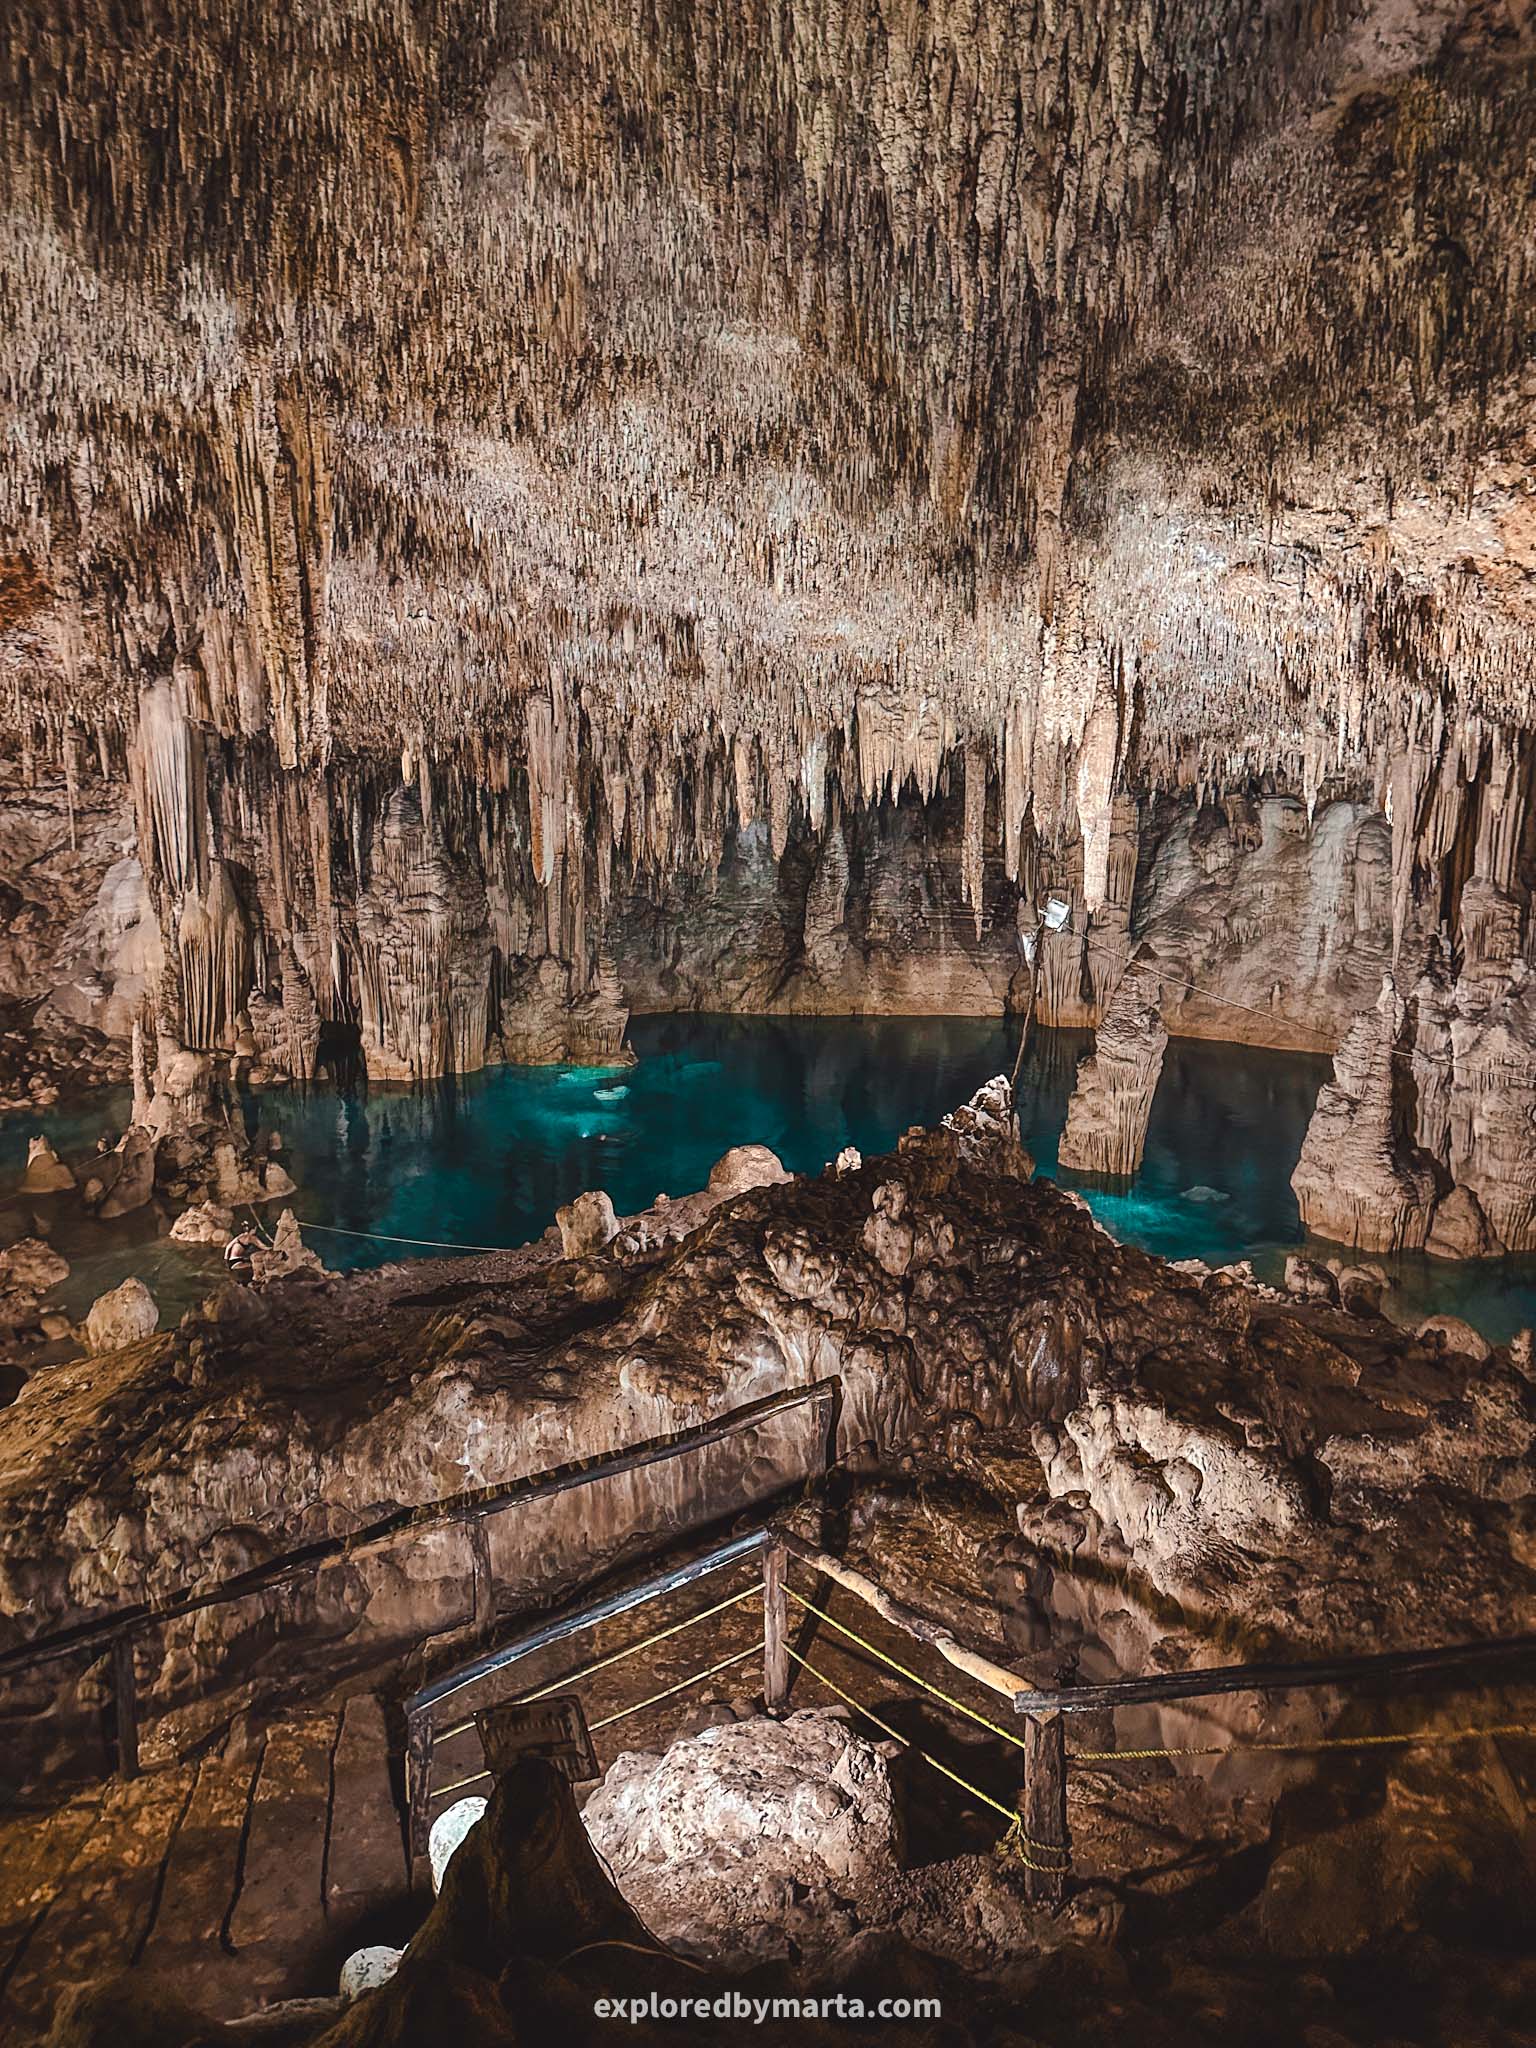 Valladolid, Mexico-Cenote Choj Ha